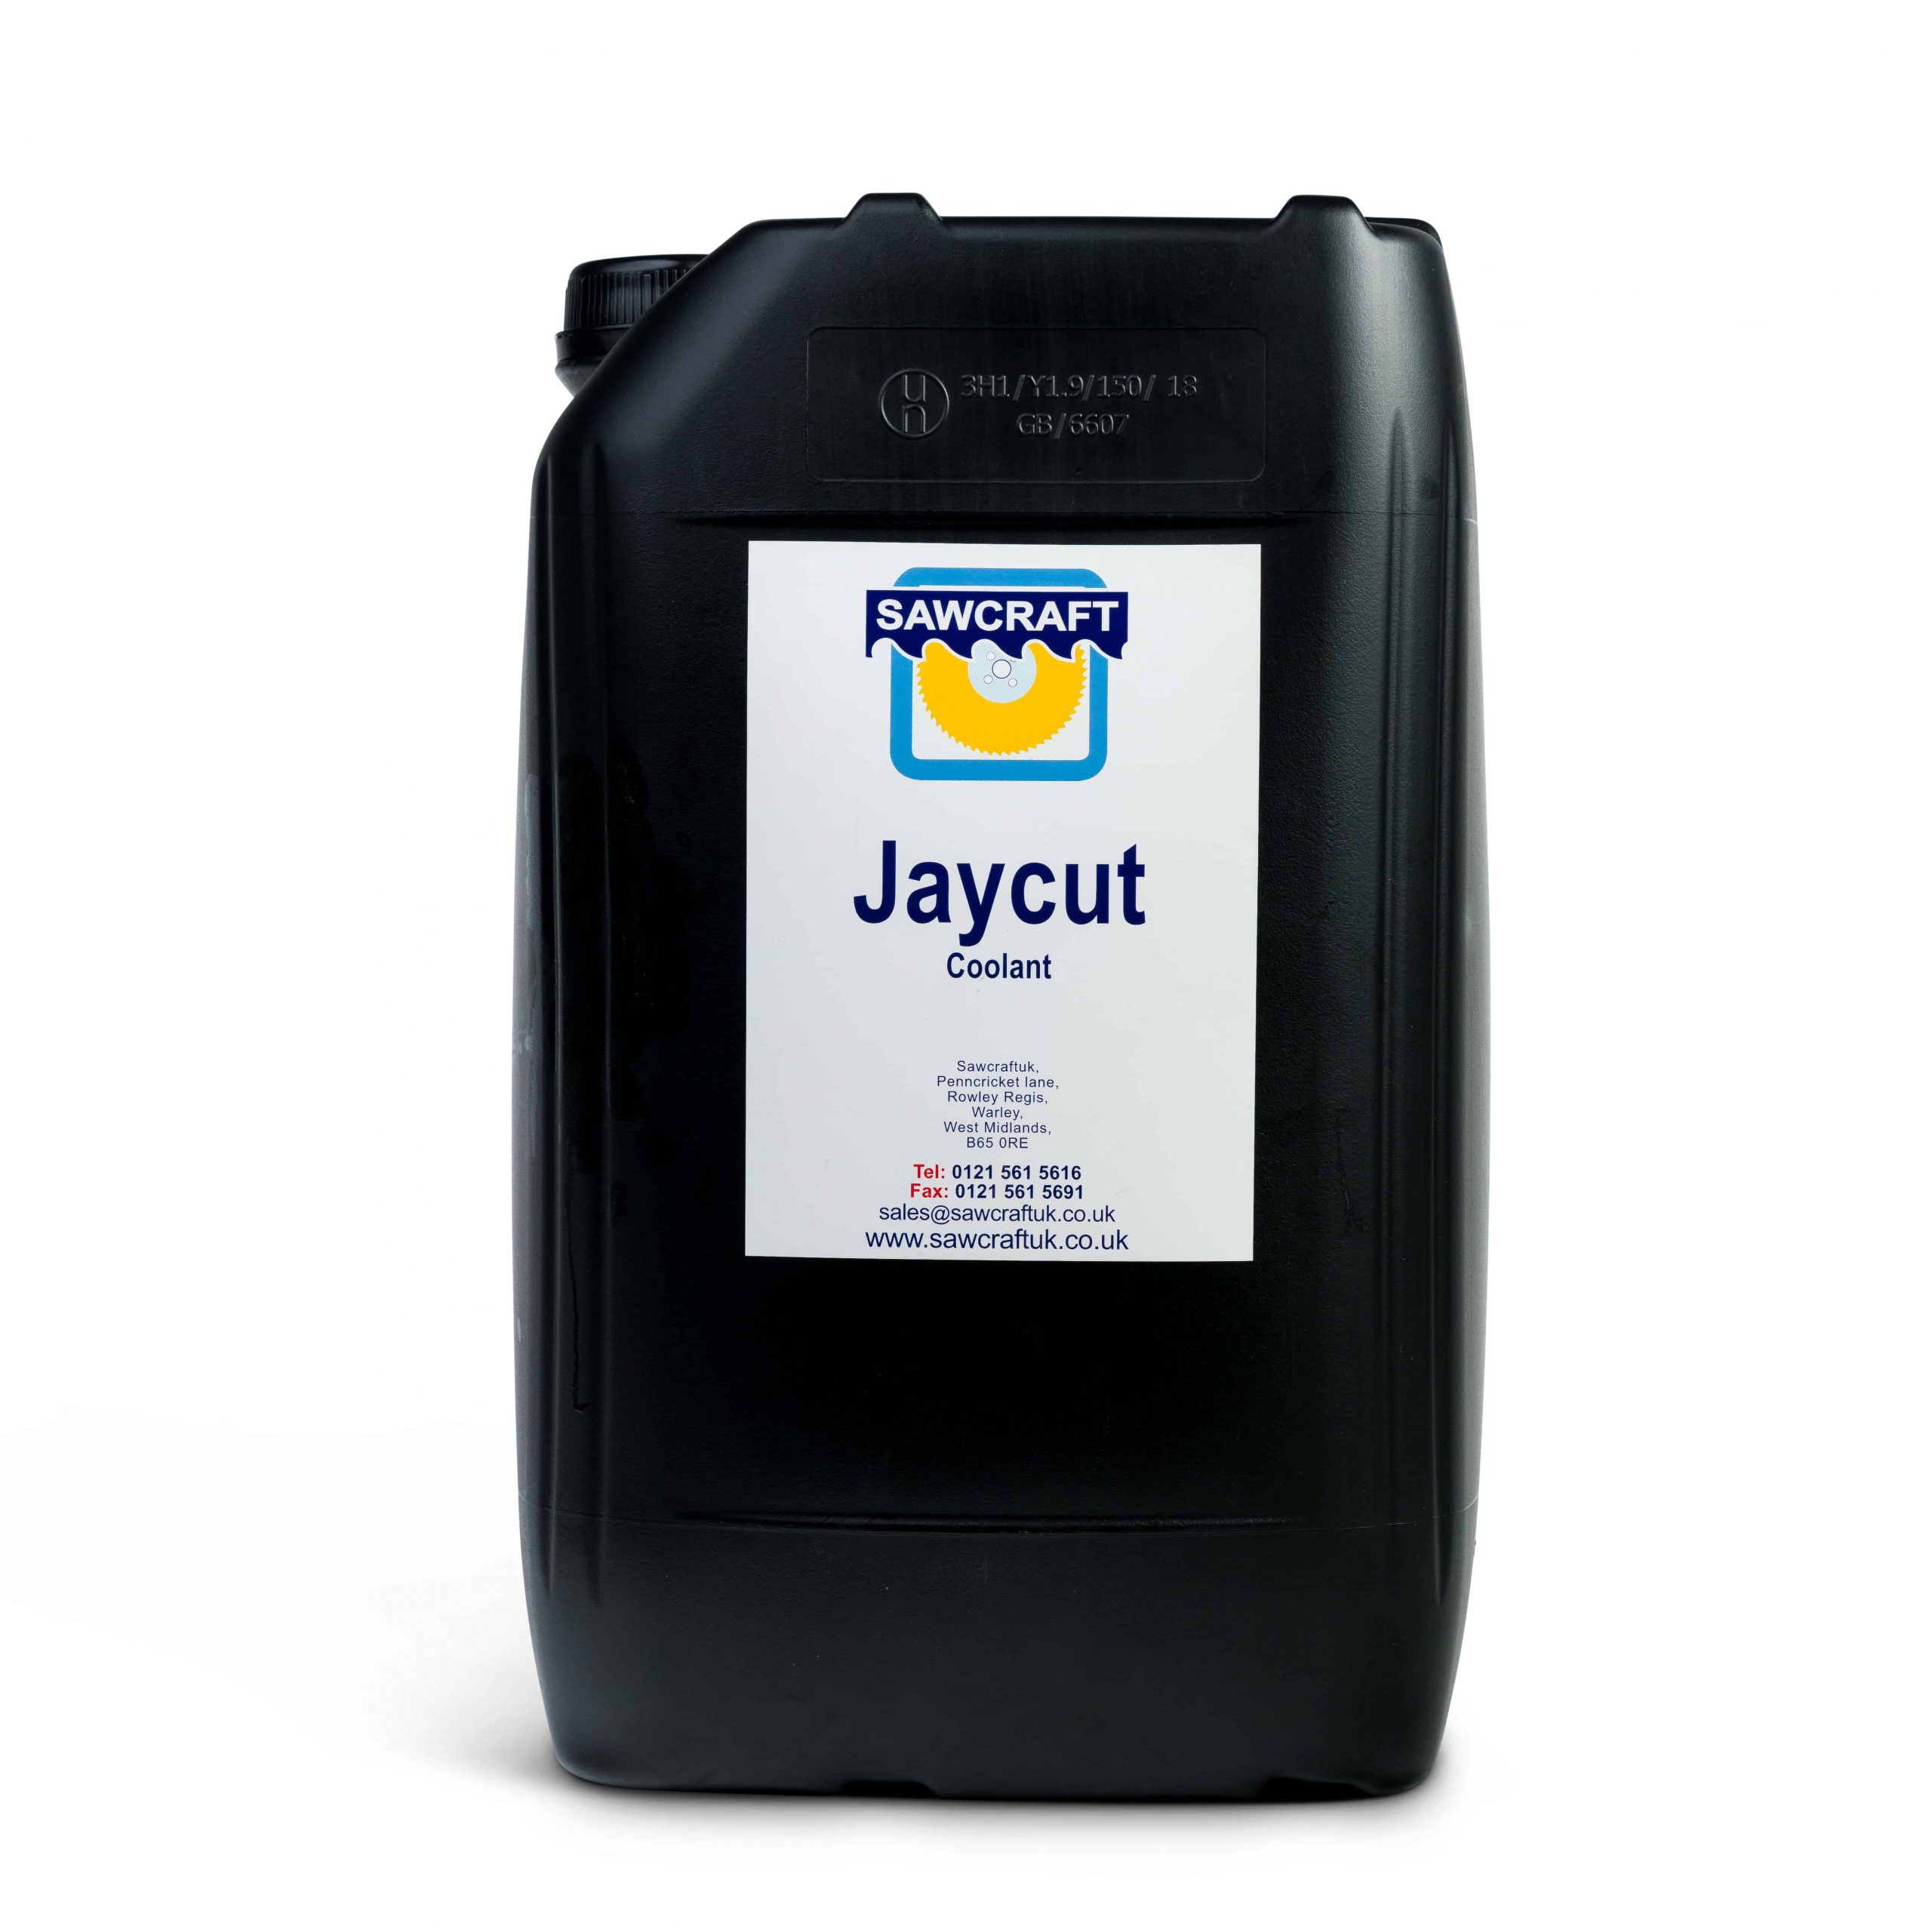 Jaycut soluble cutting oil